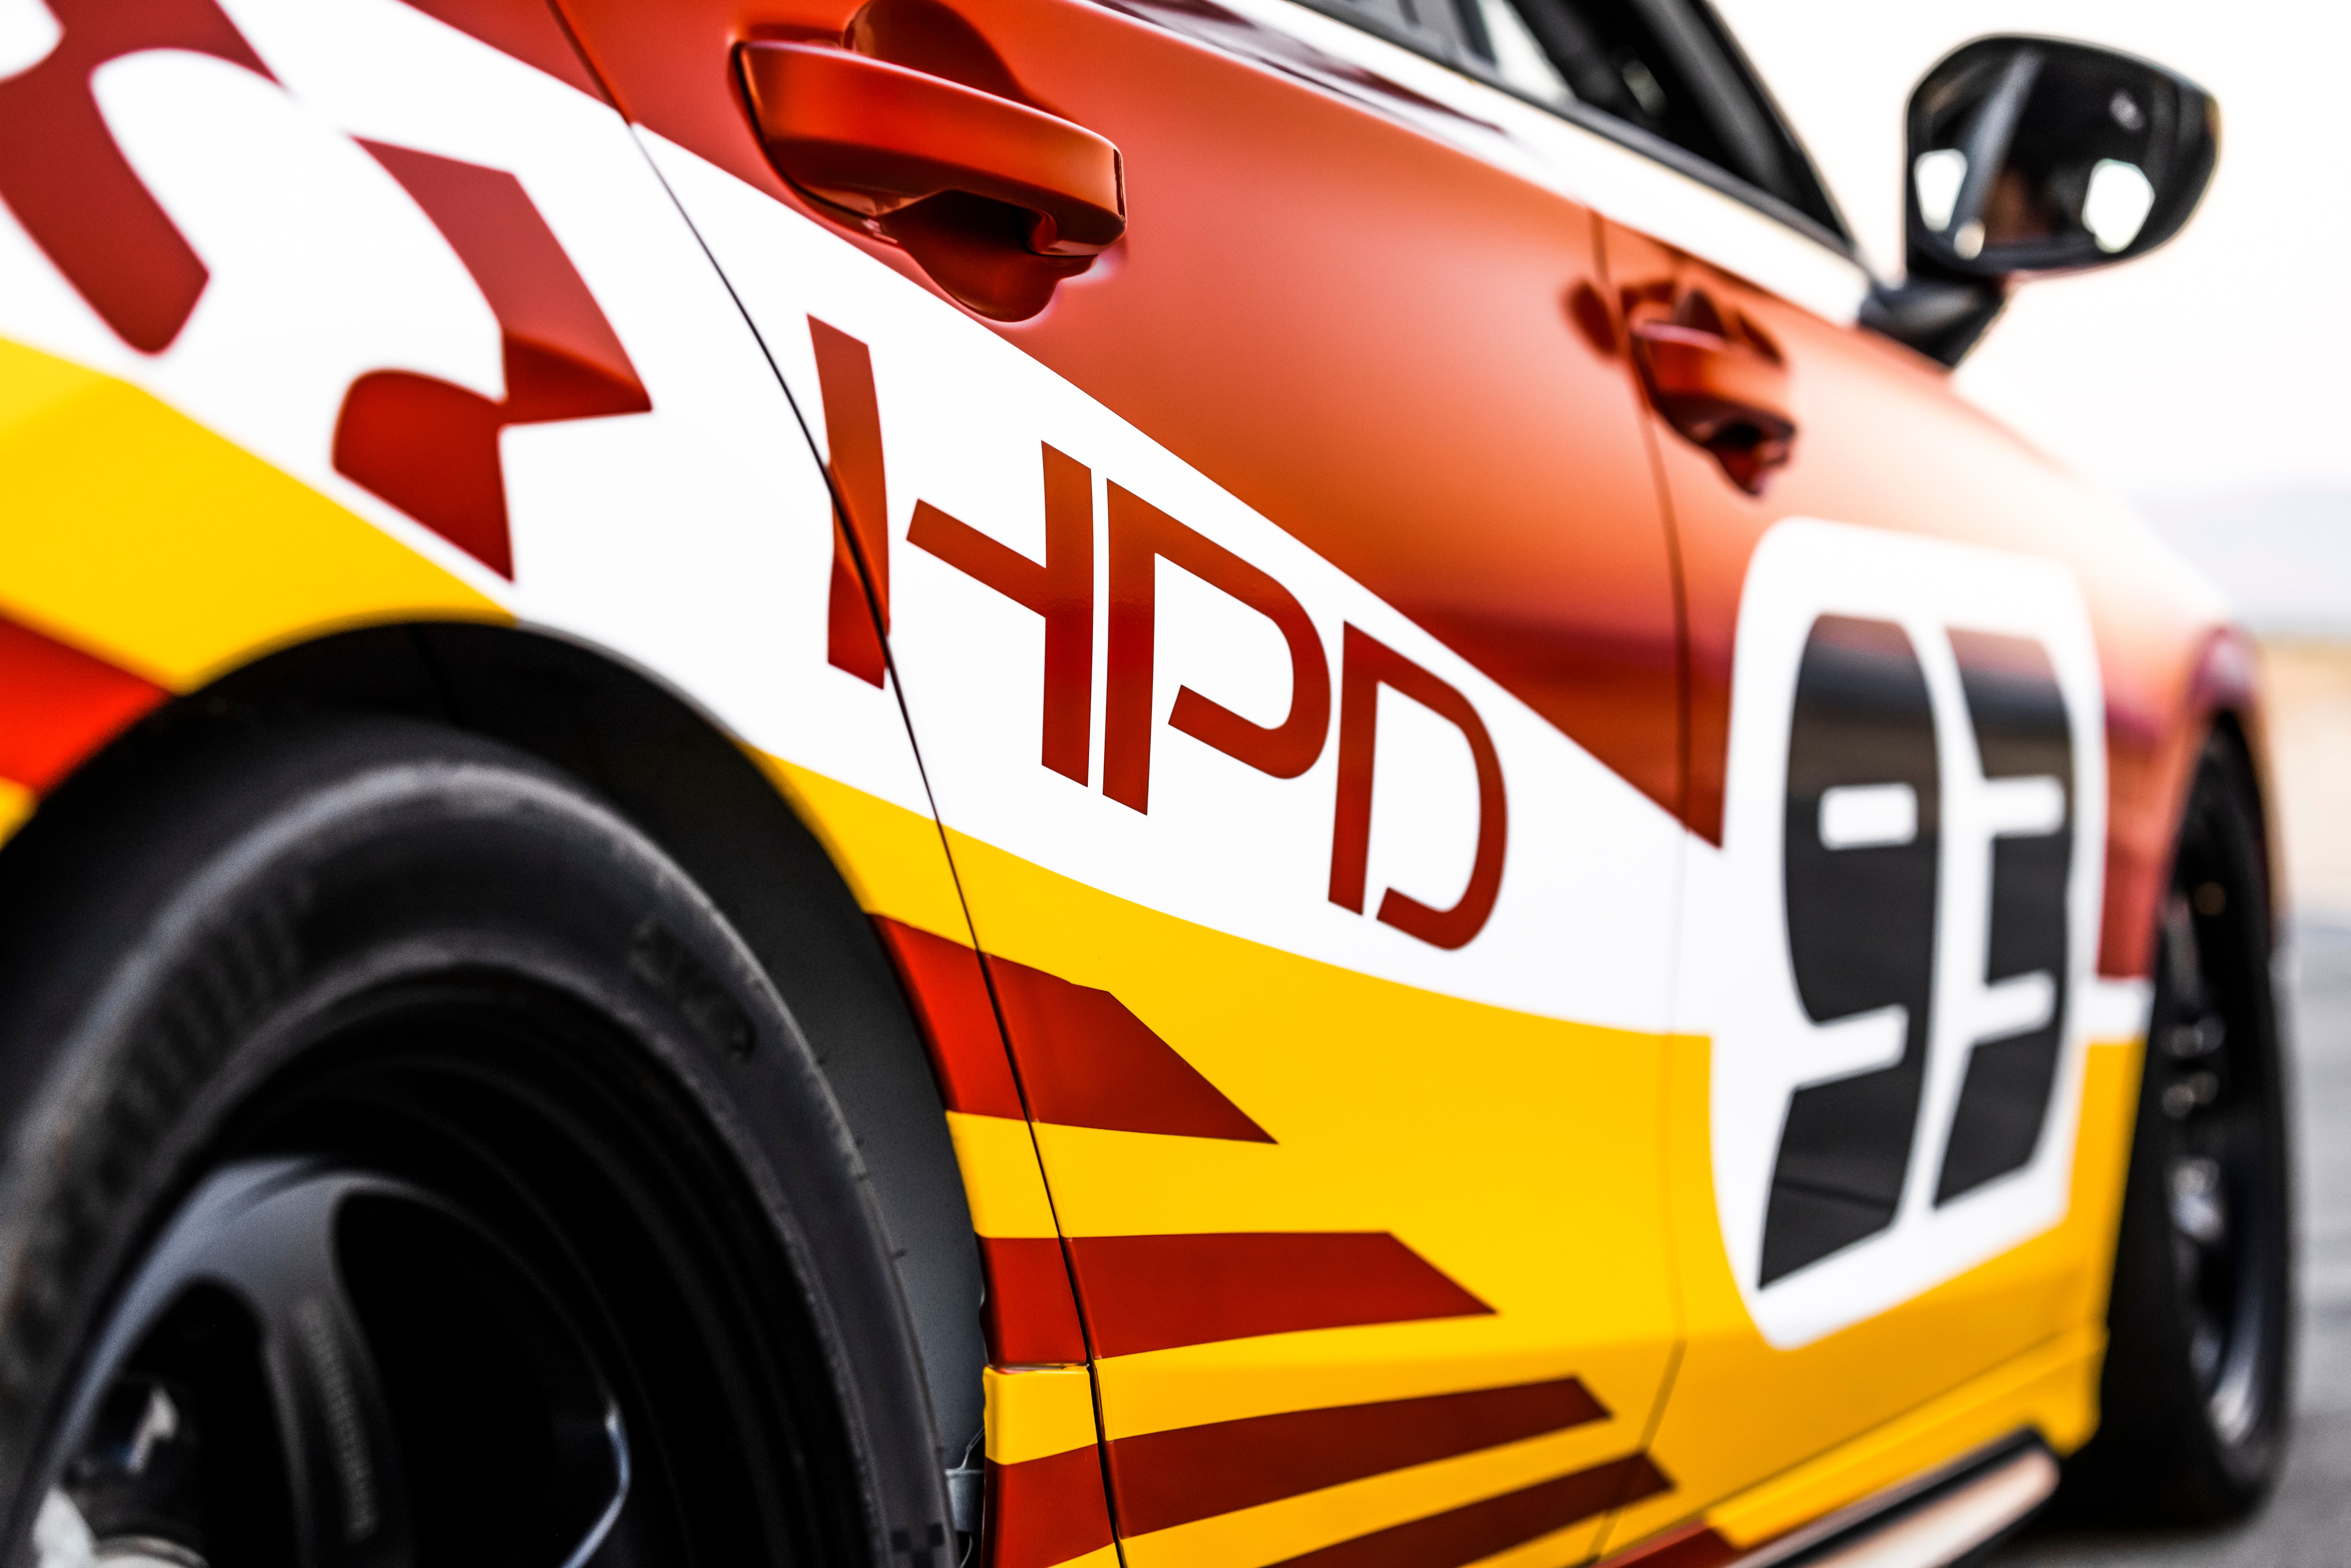 2021 HPD Civic Si Race Car Prototype